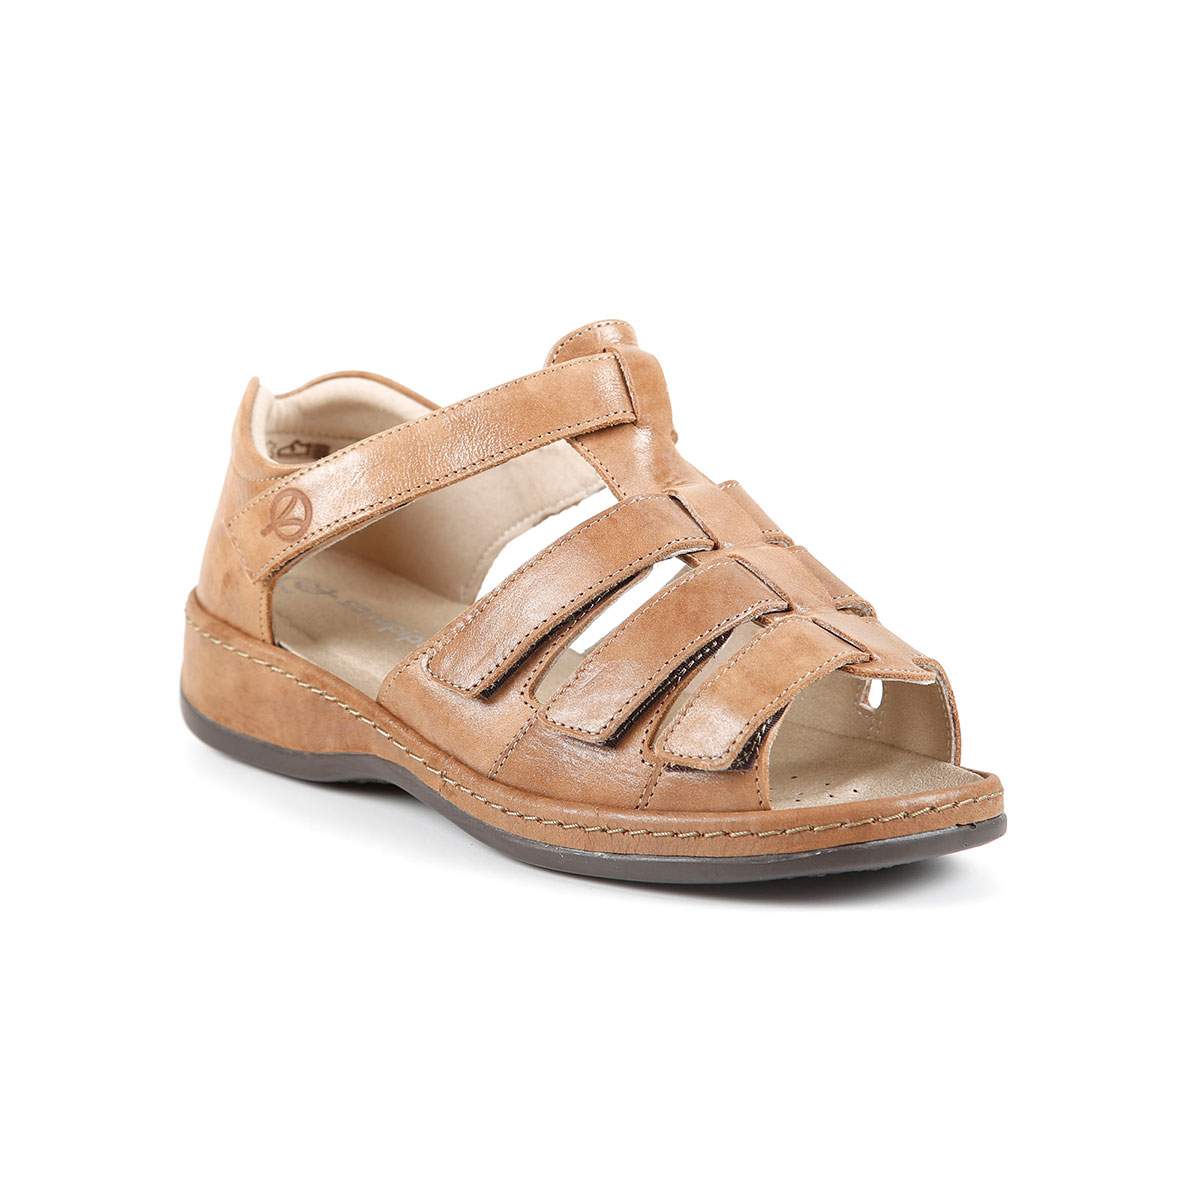 Tan colour Carrie sandal